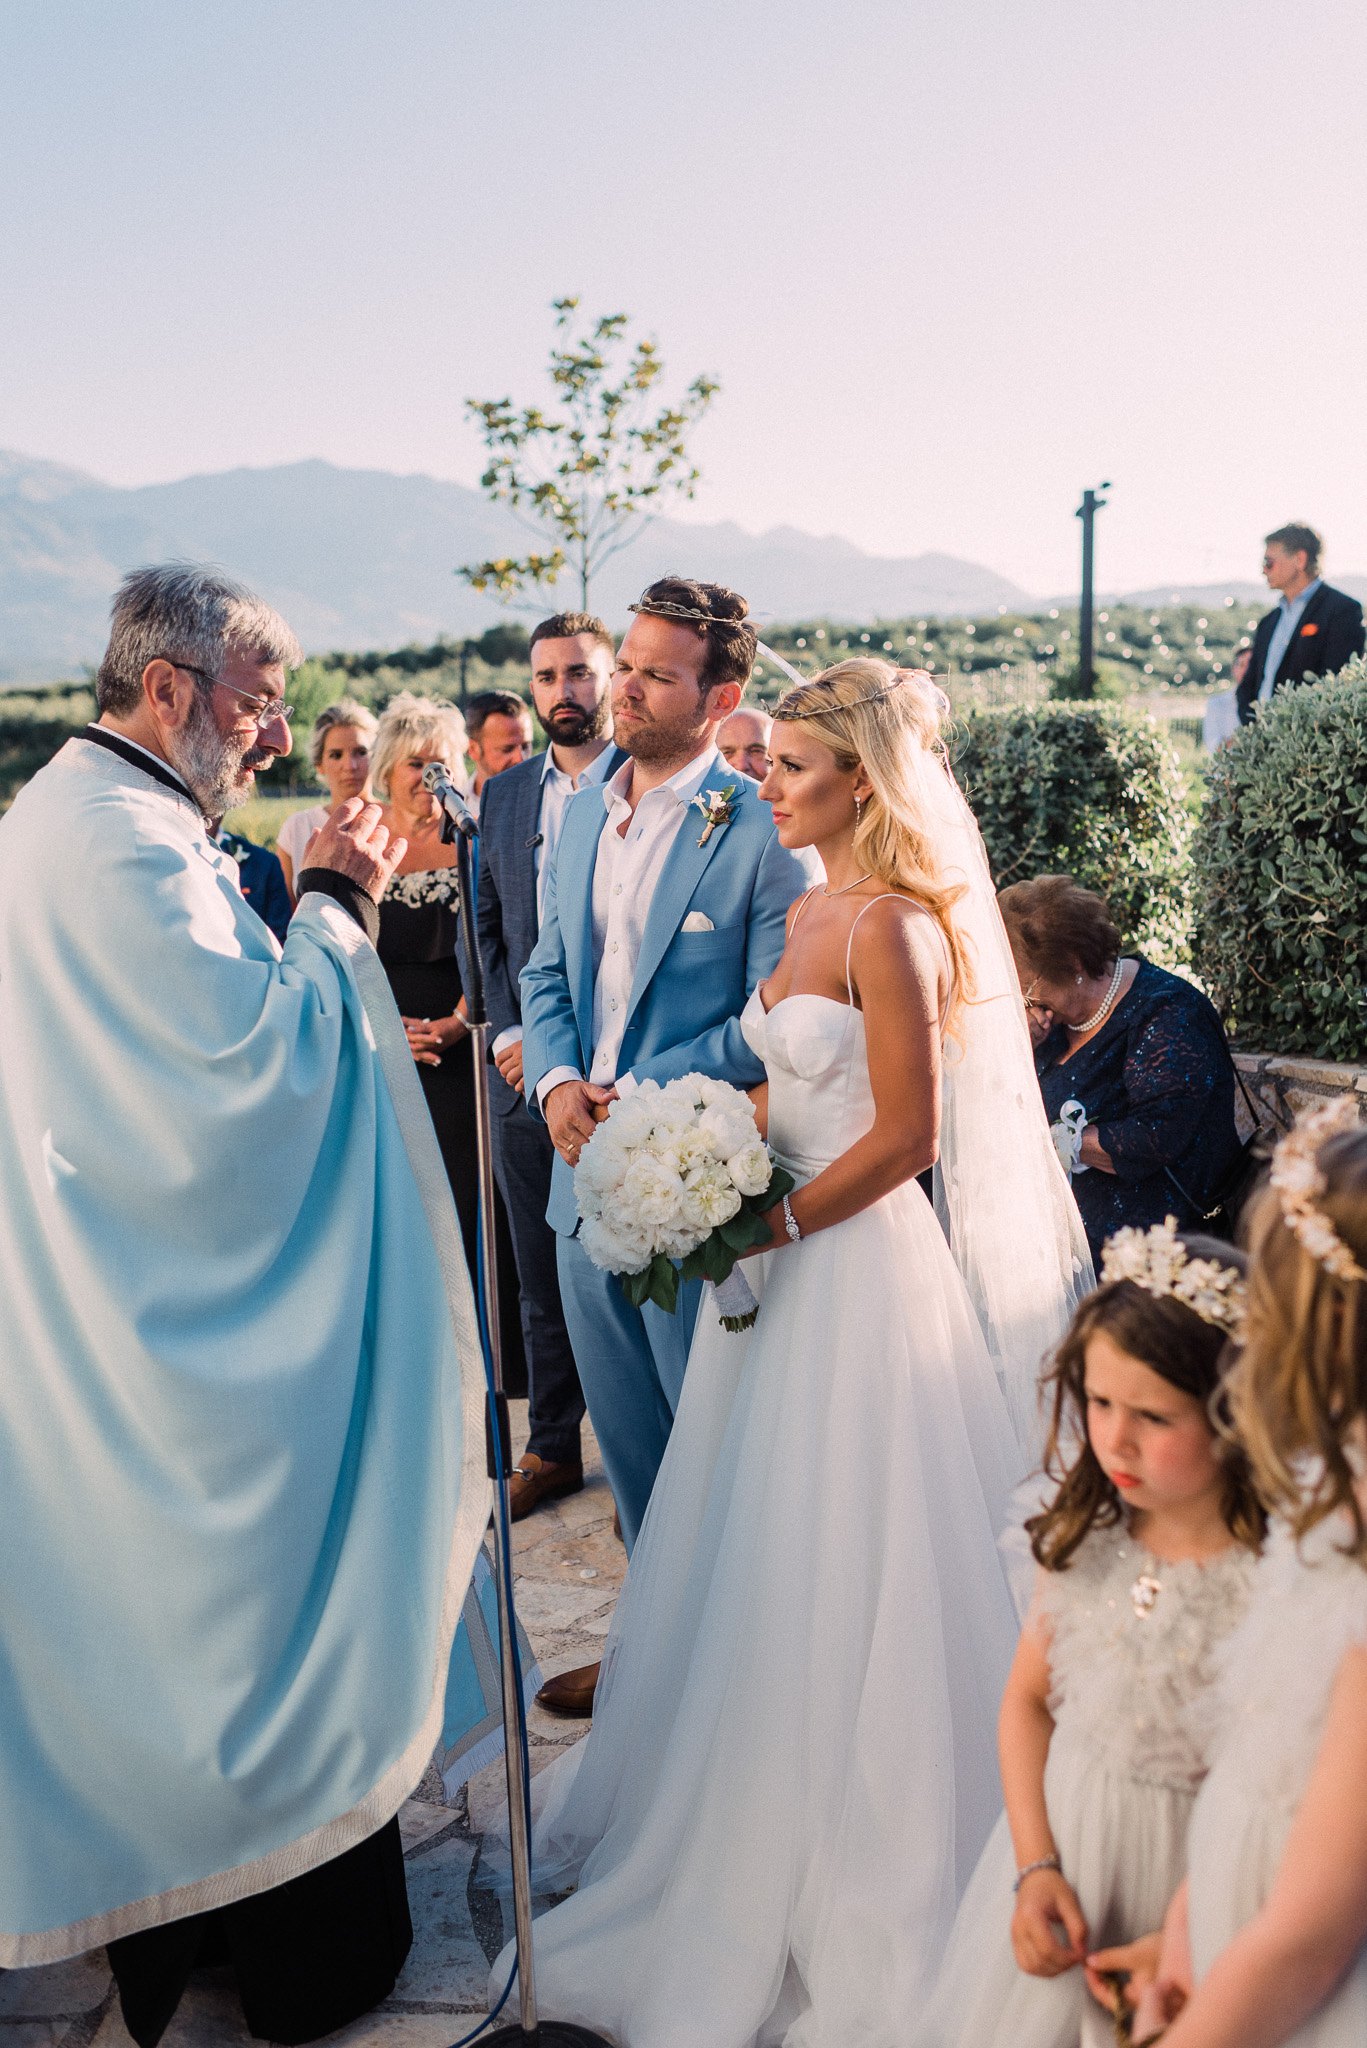 greek wedding traditions